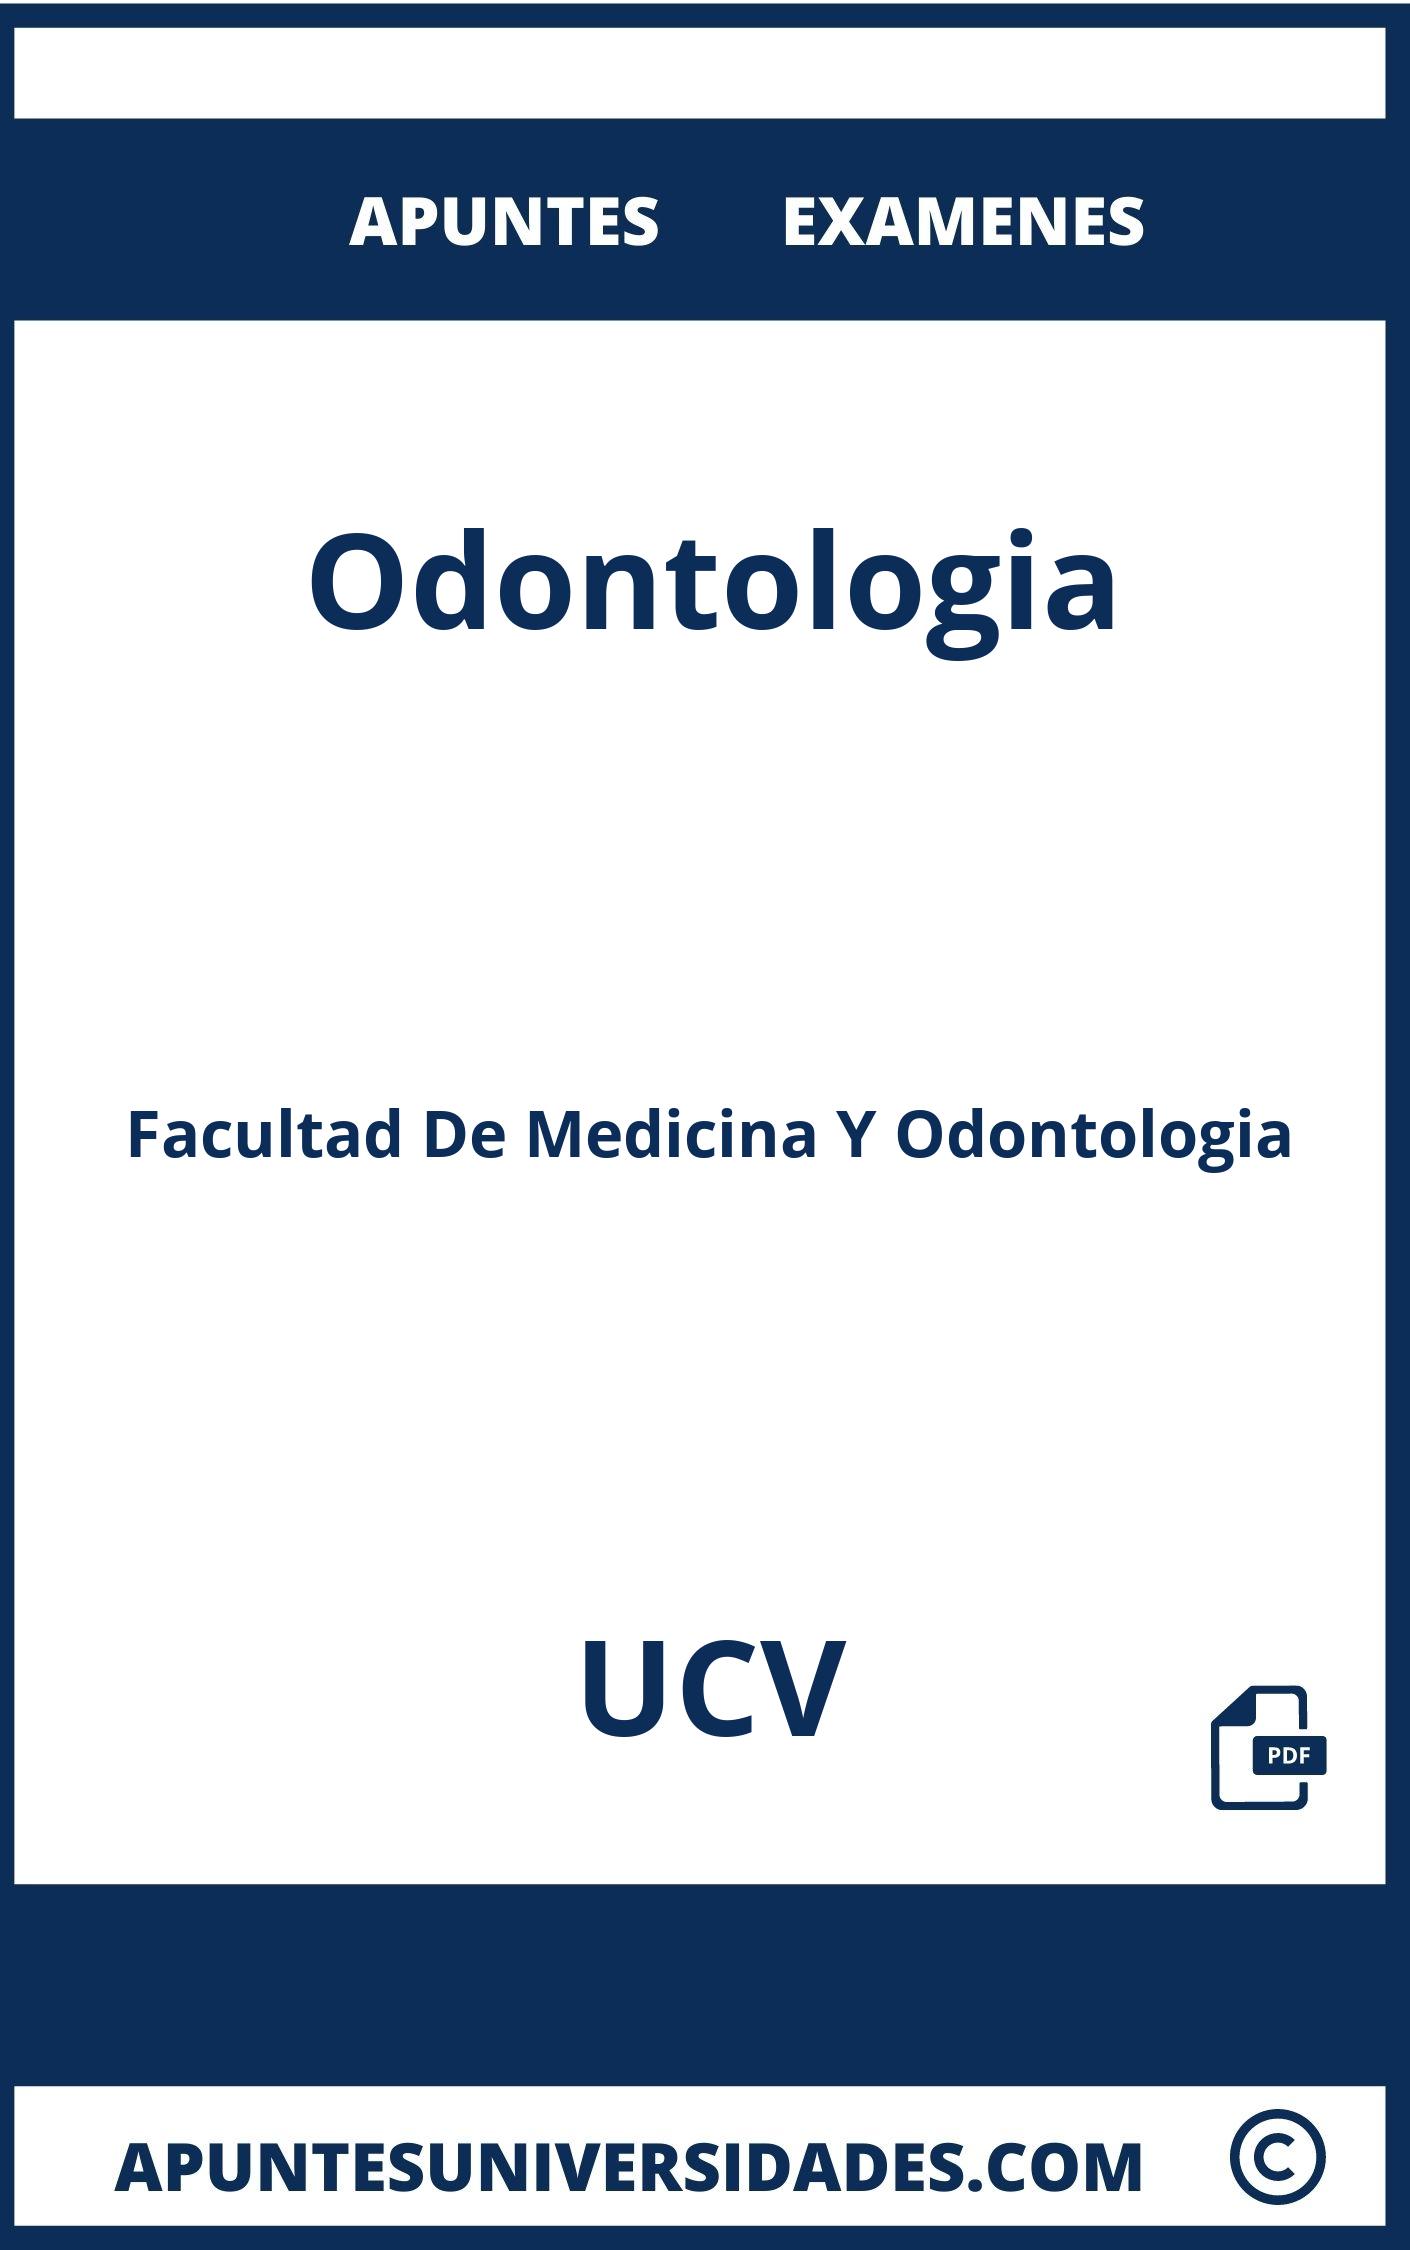 Odontologia UCV Examenes Apuntes